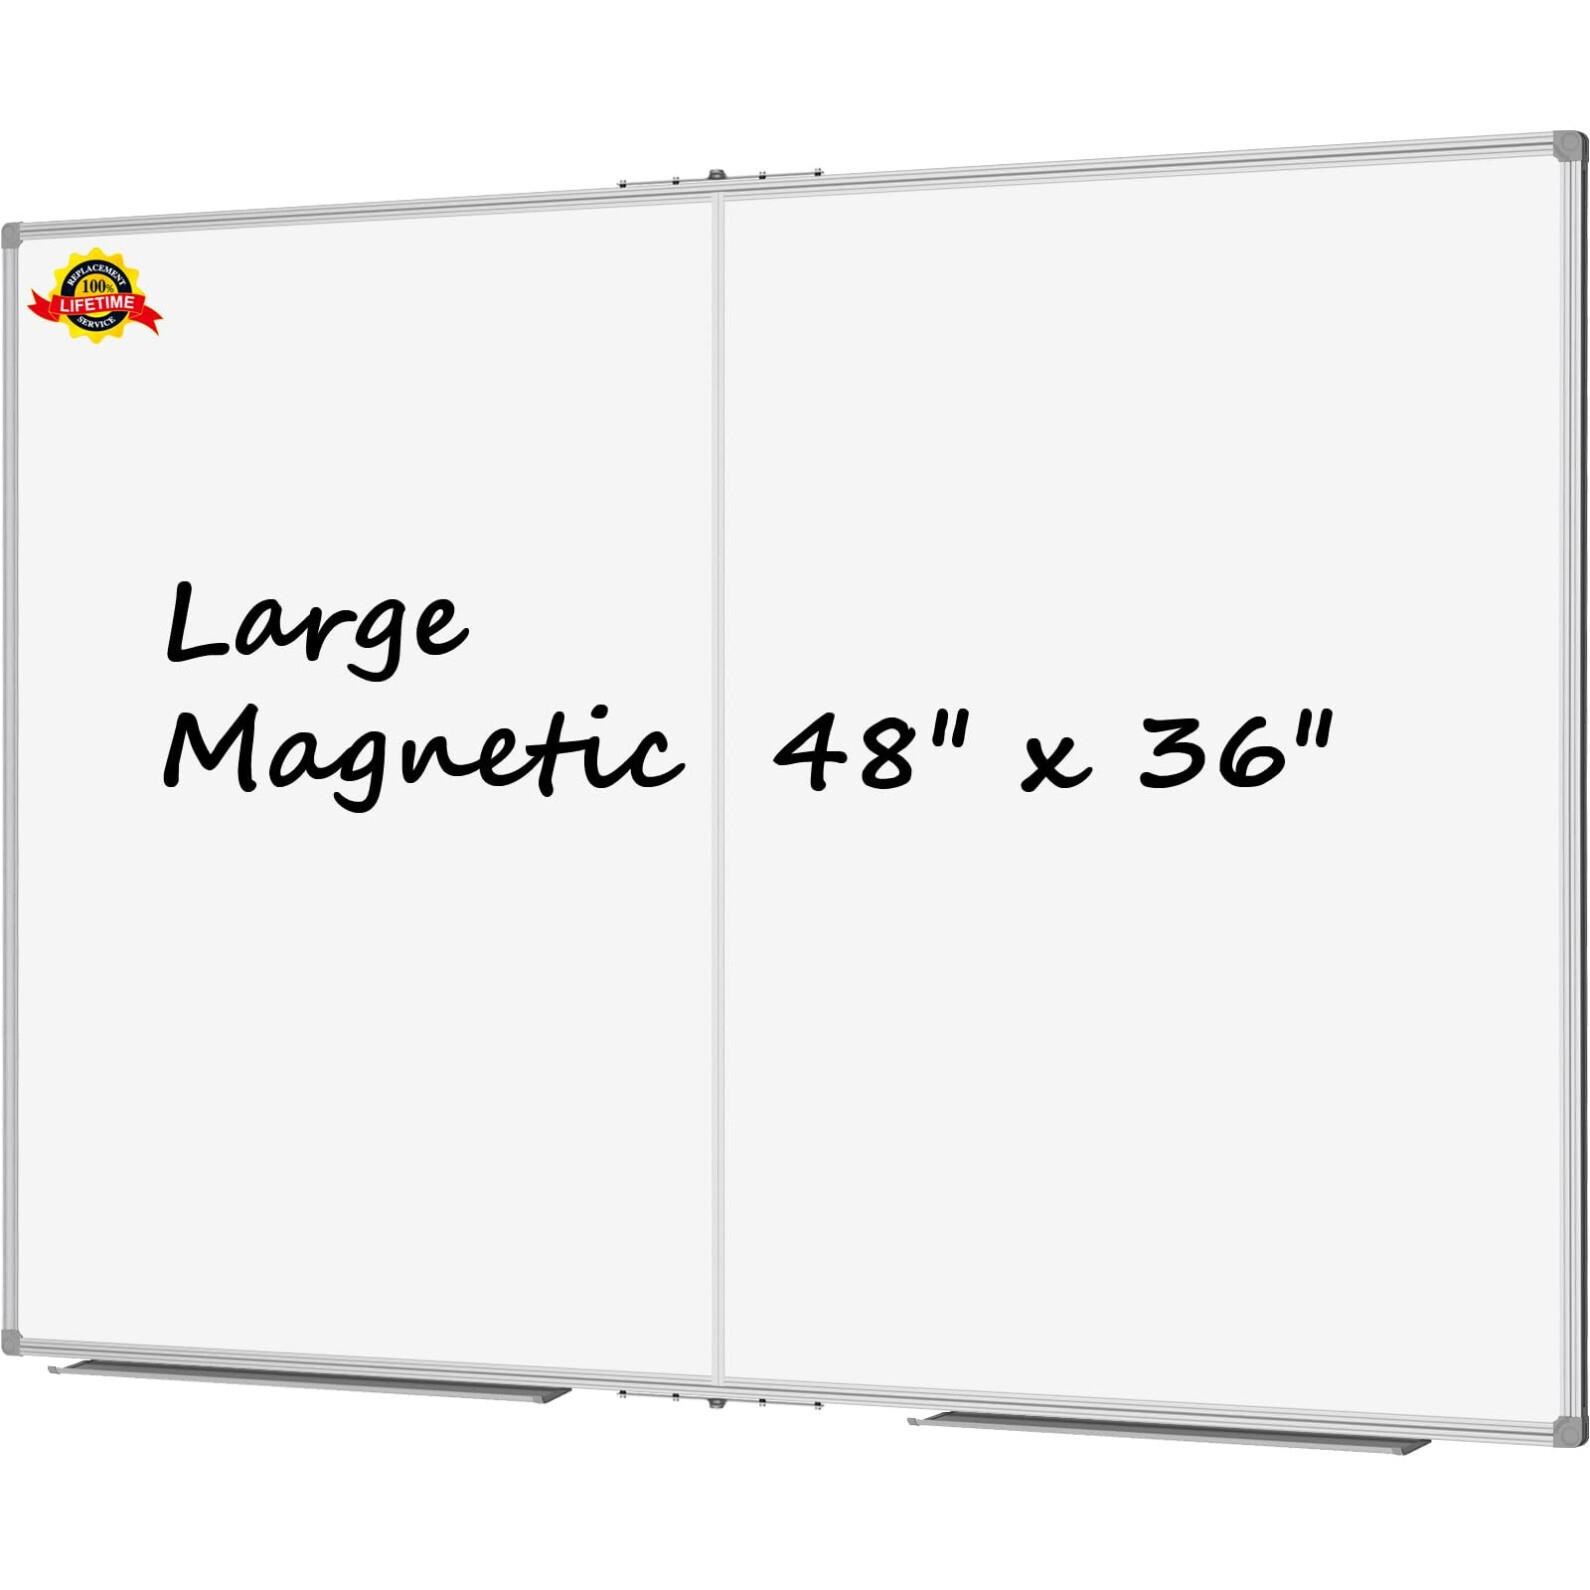 Lockways Large Magnetic Dry Erase Board 48" x 36",